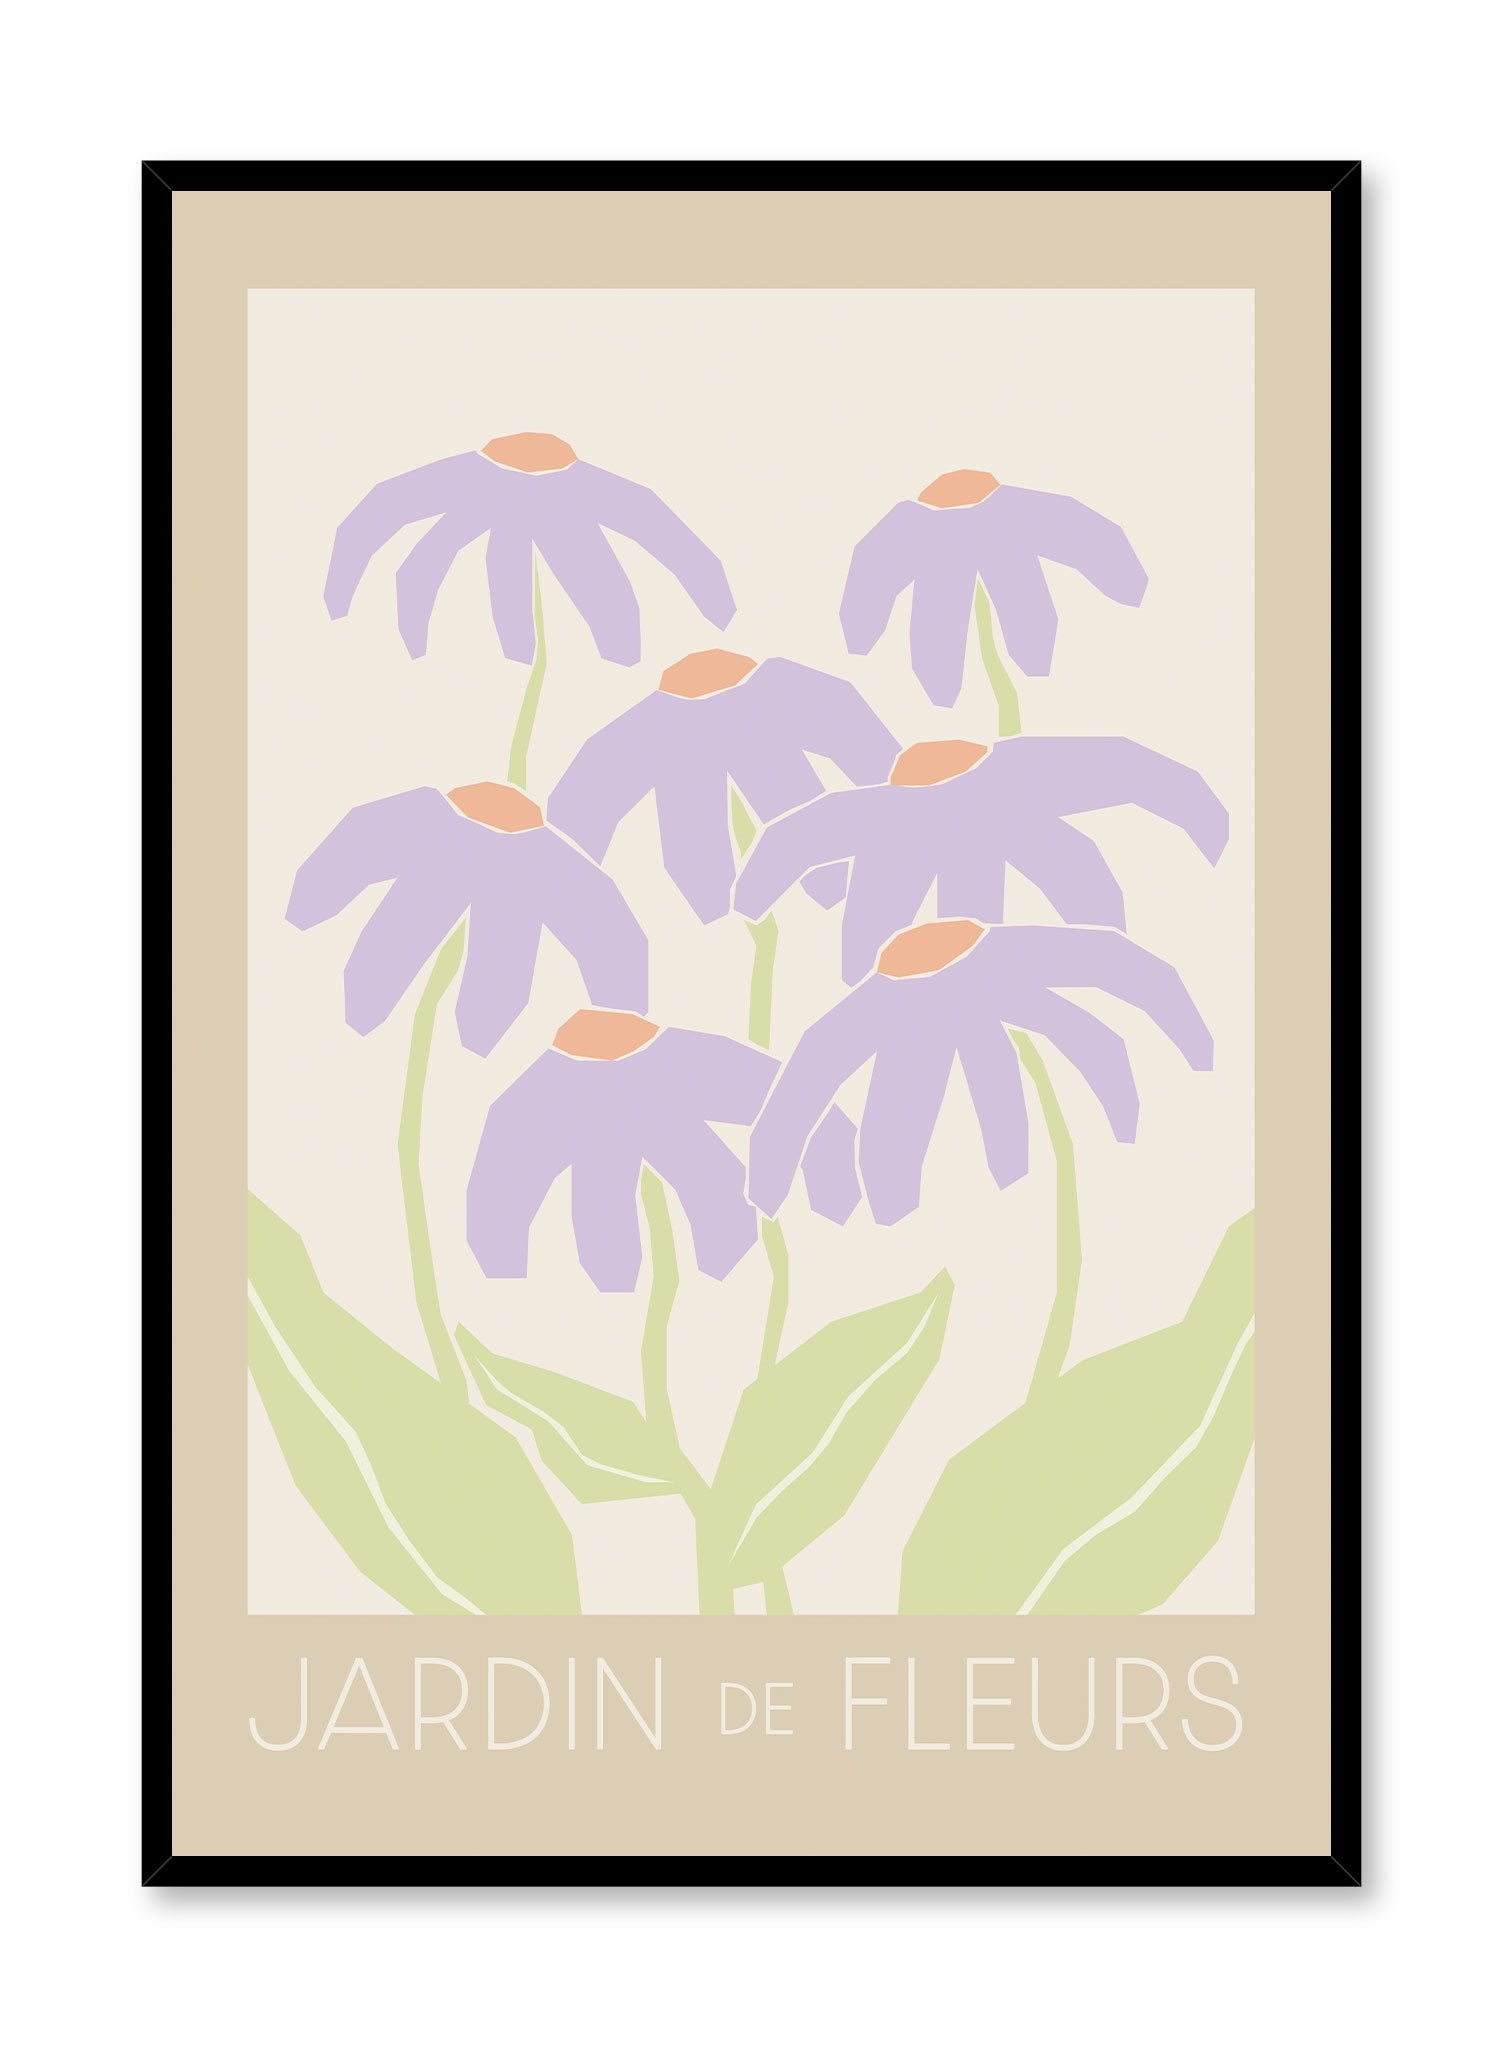 Joyful is a vector illustration of seven purple autumn daisies by Opposite Wall.